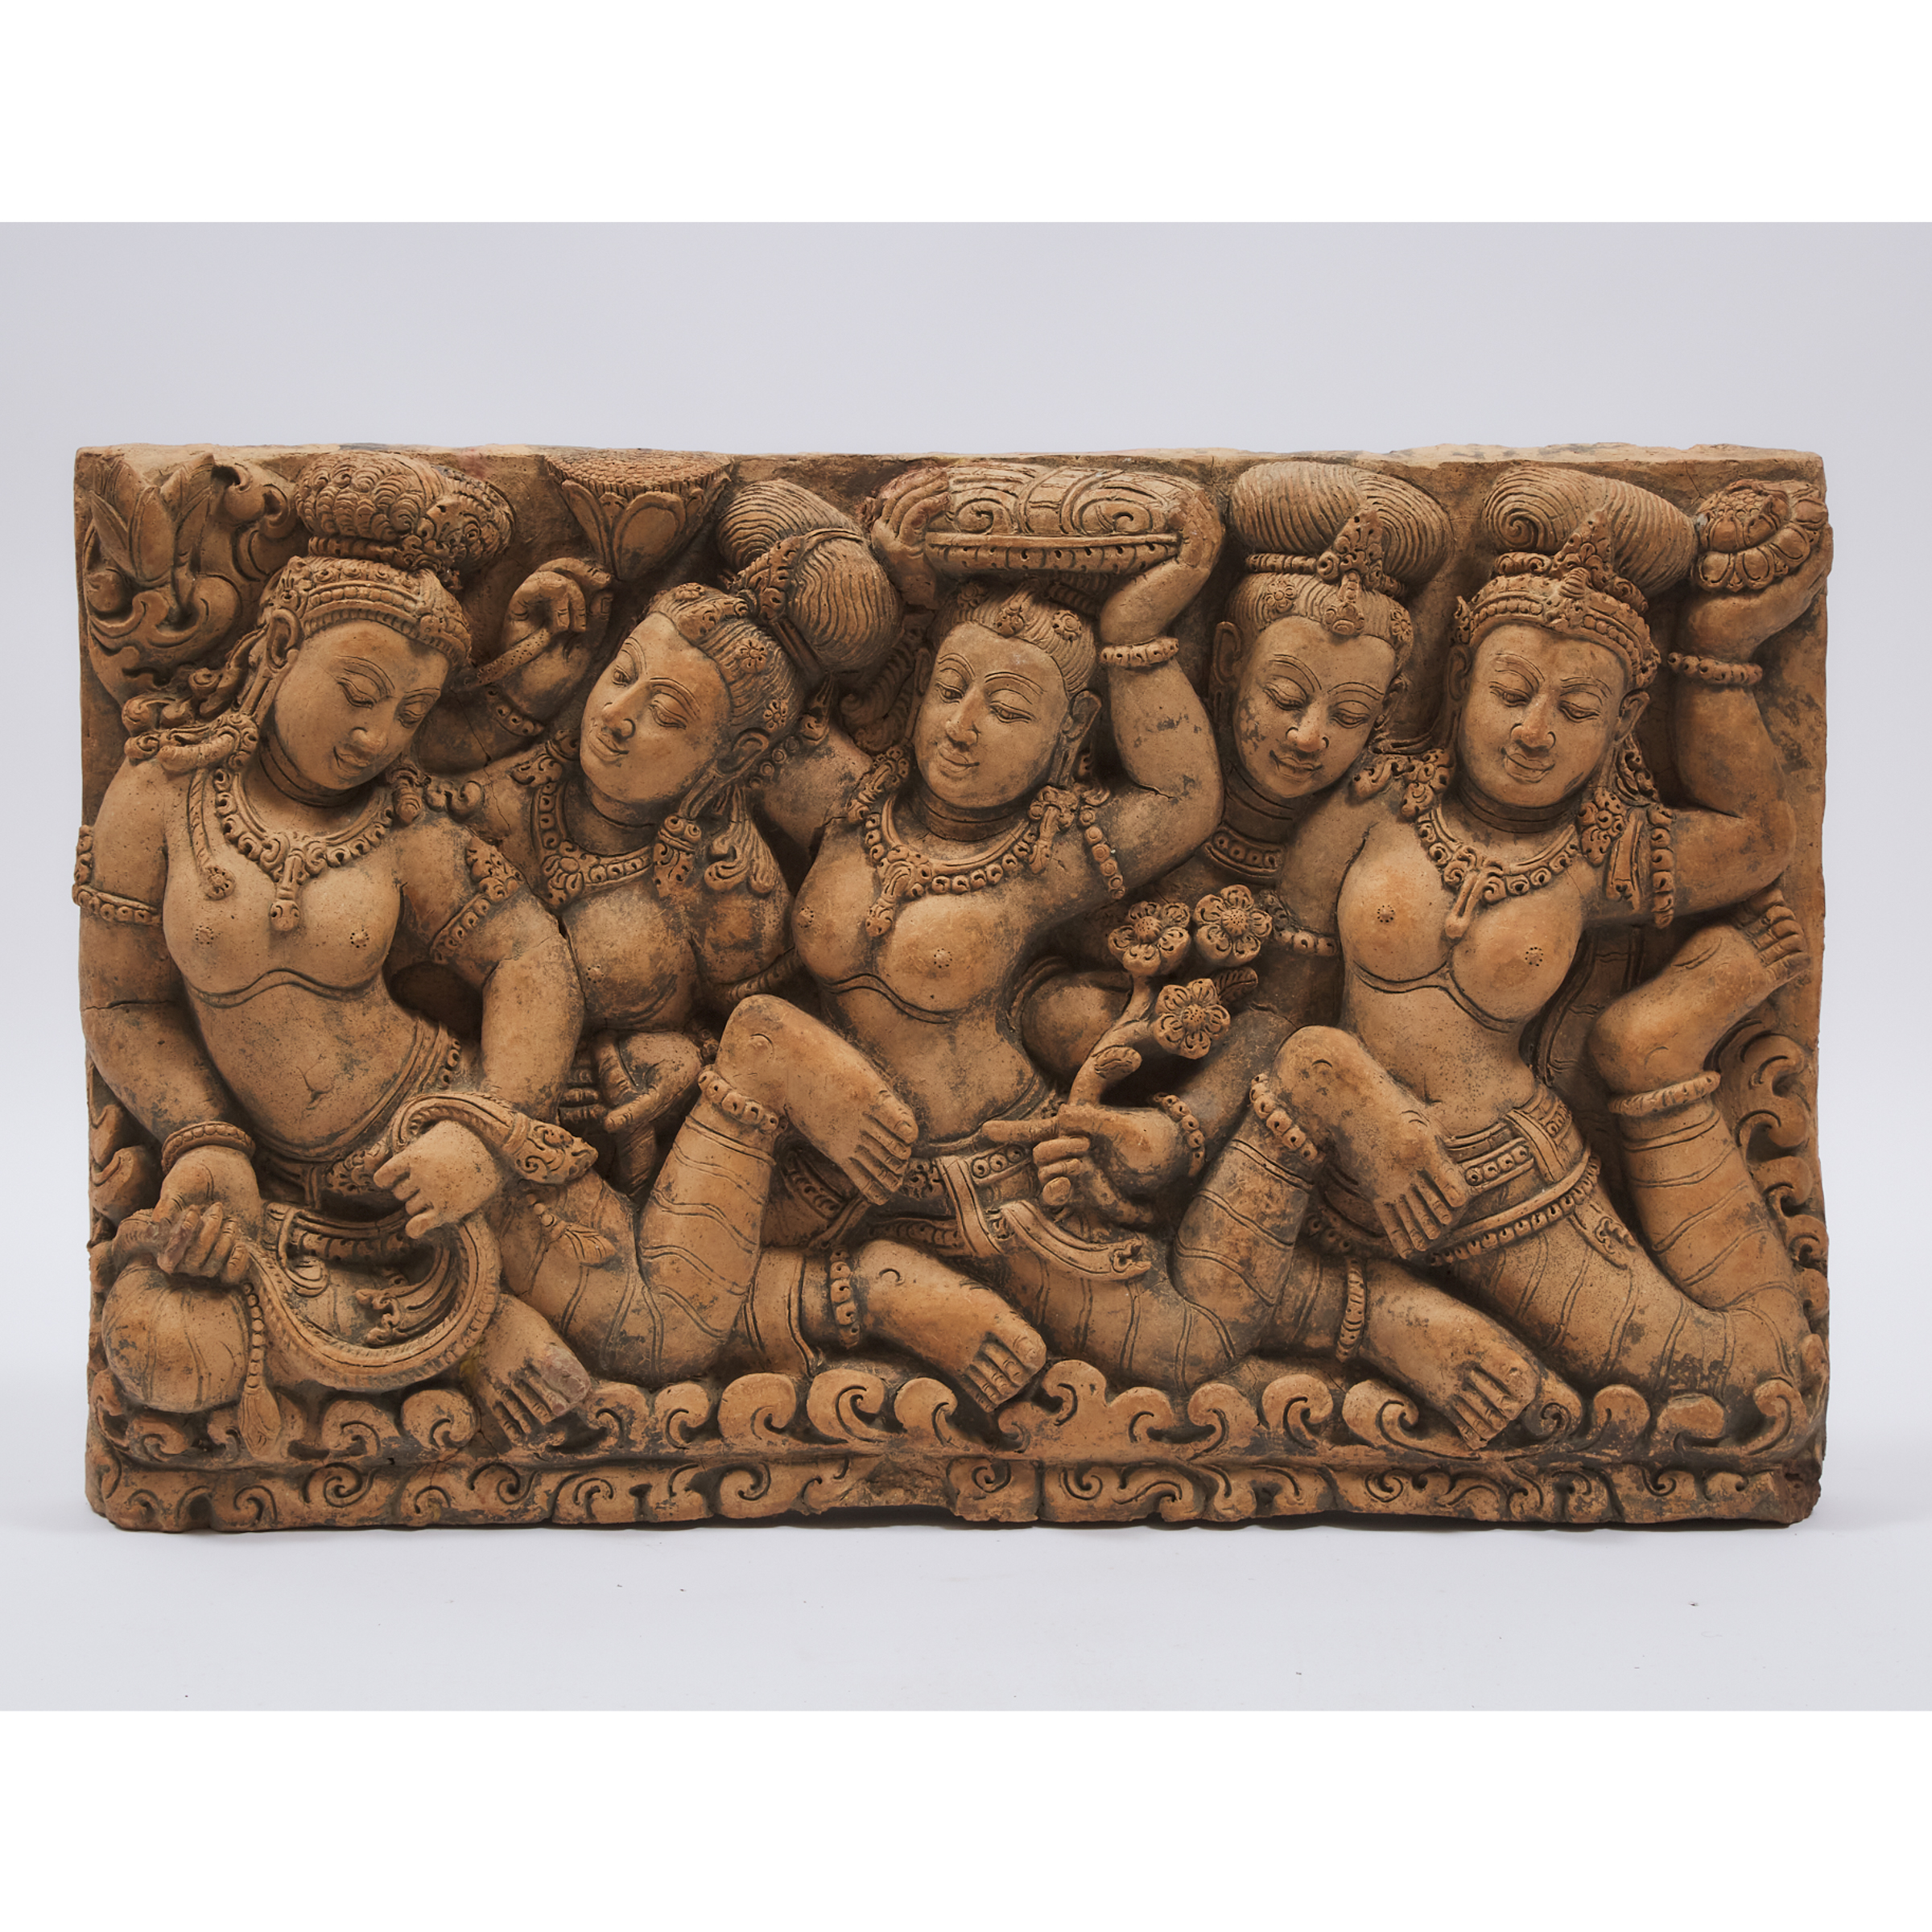 A Massive Thai Terracotta Panel Depicting Female Deities, 15th Century or Later